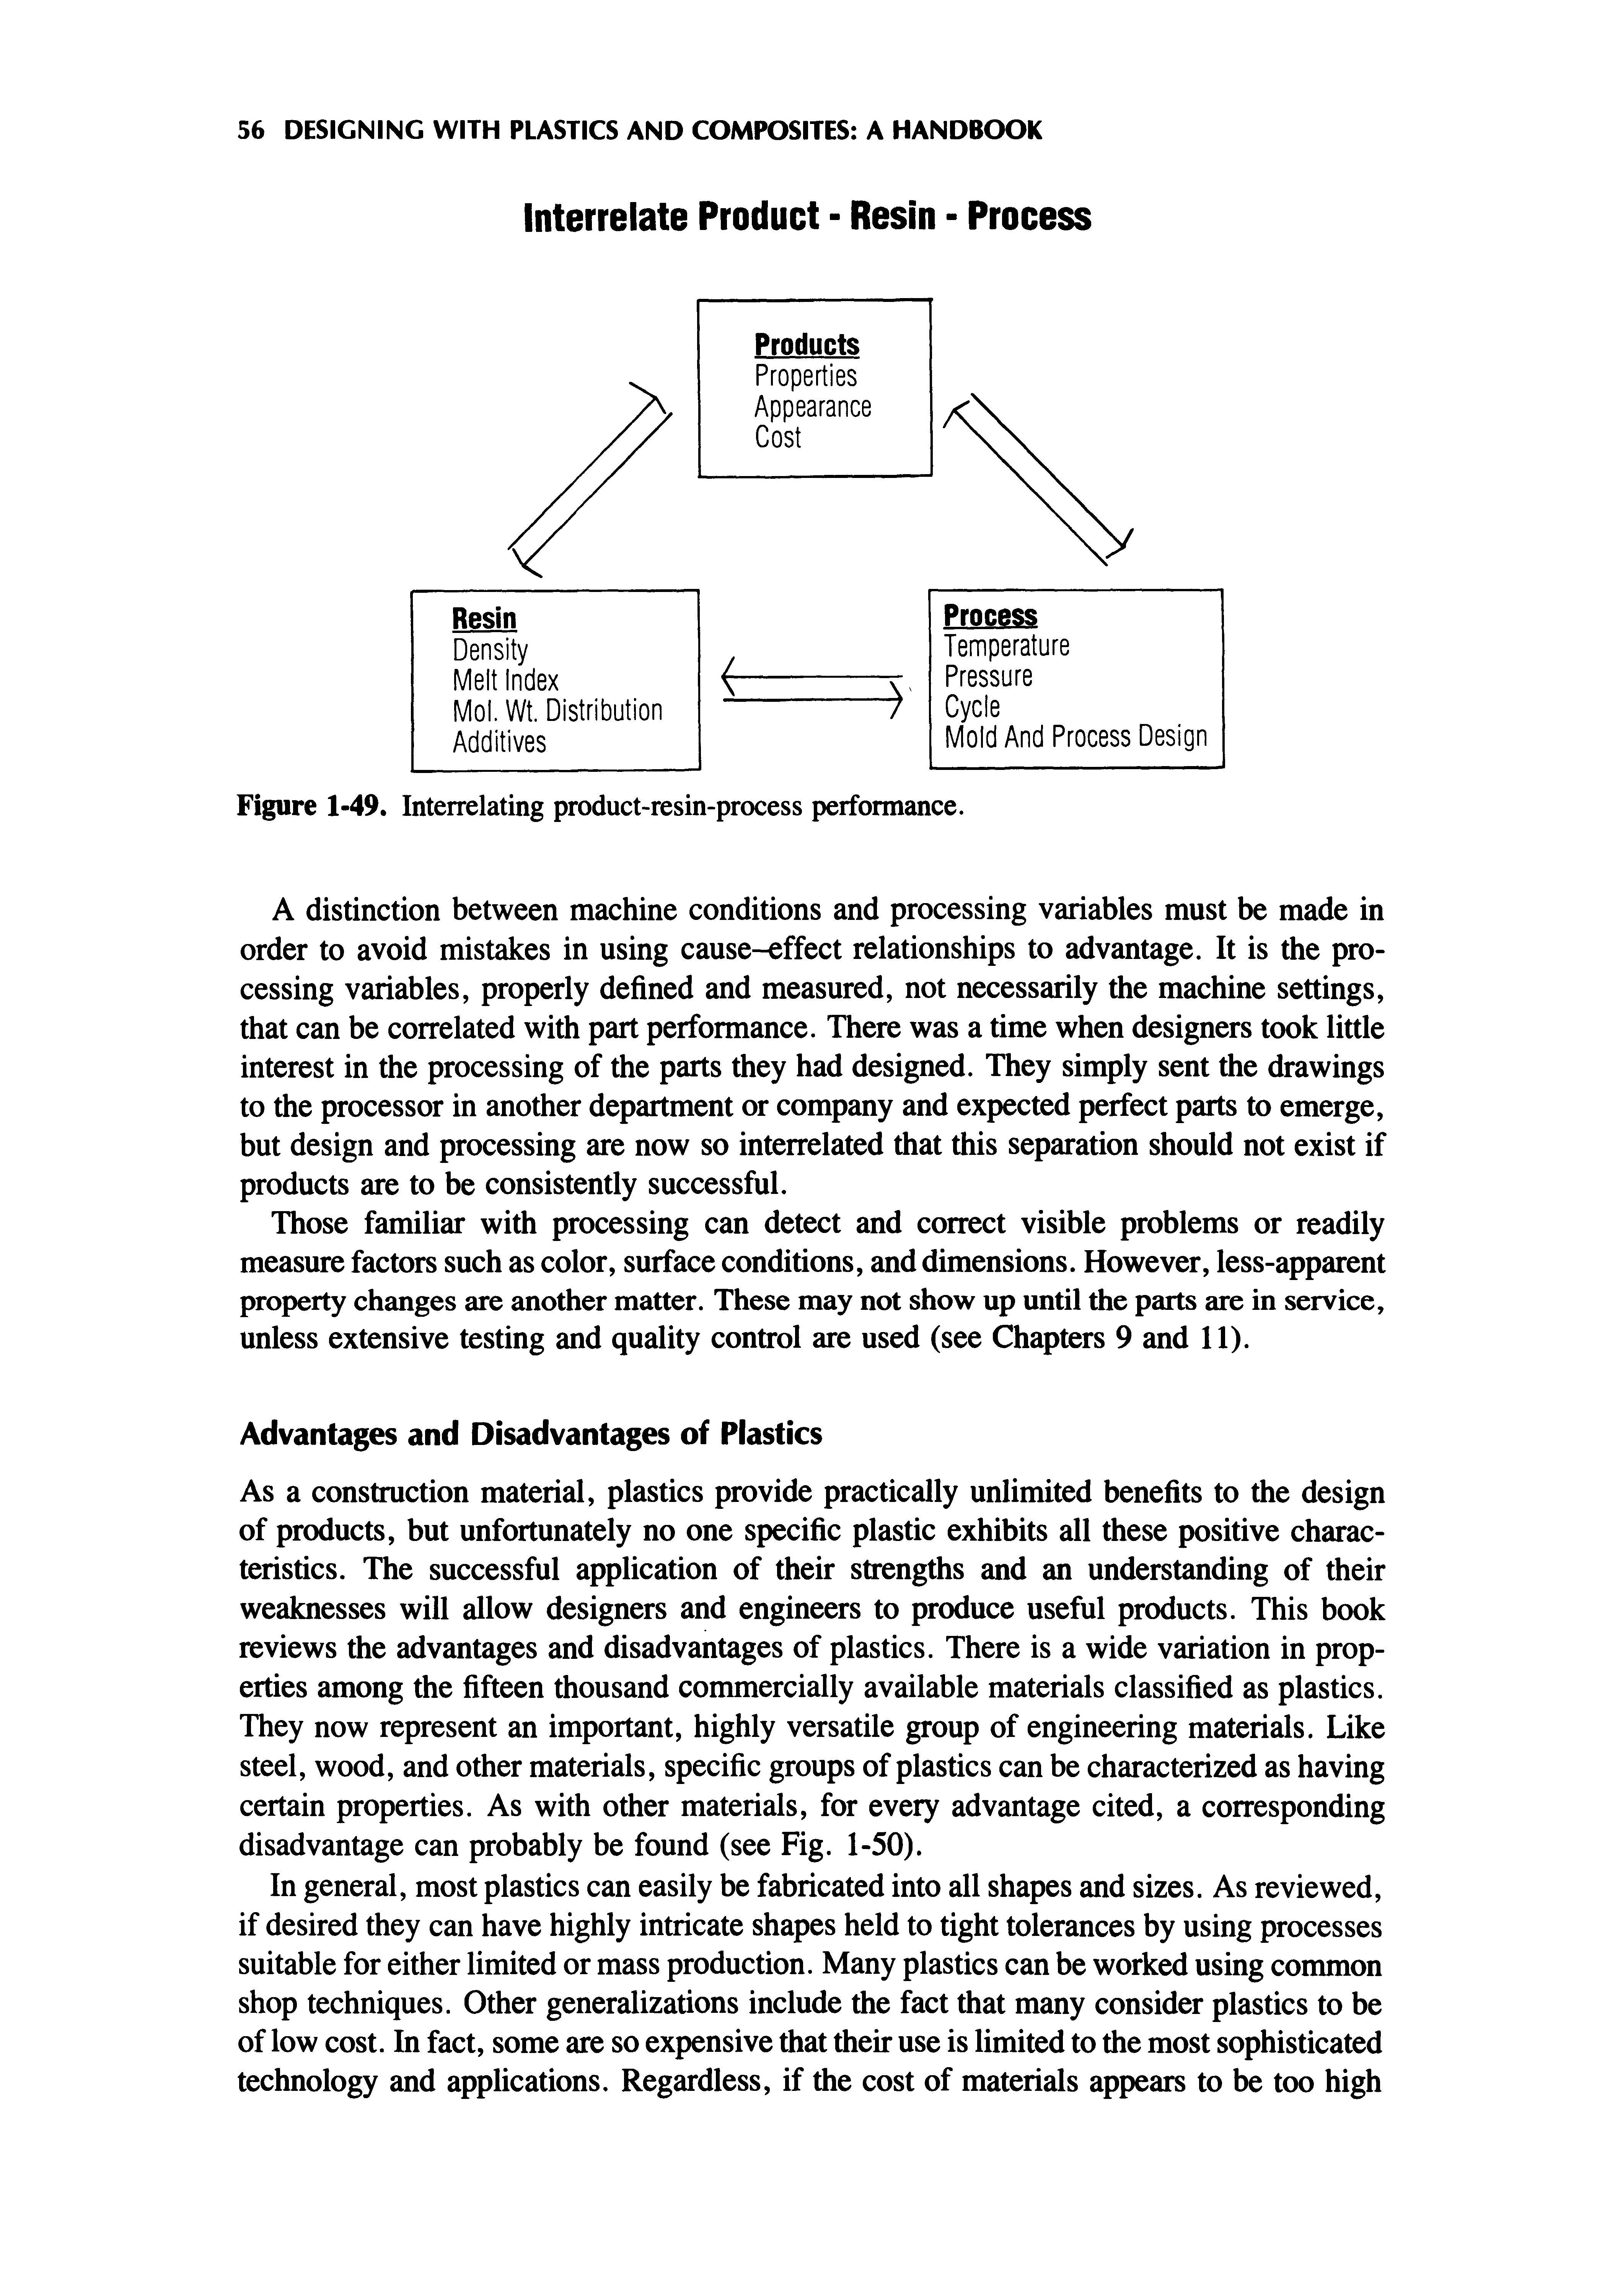 Figure 1-49. Interrelating product-resin-process performance.